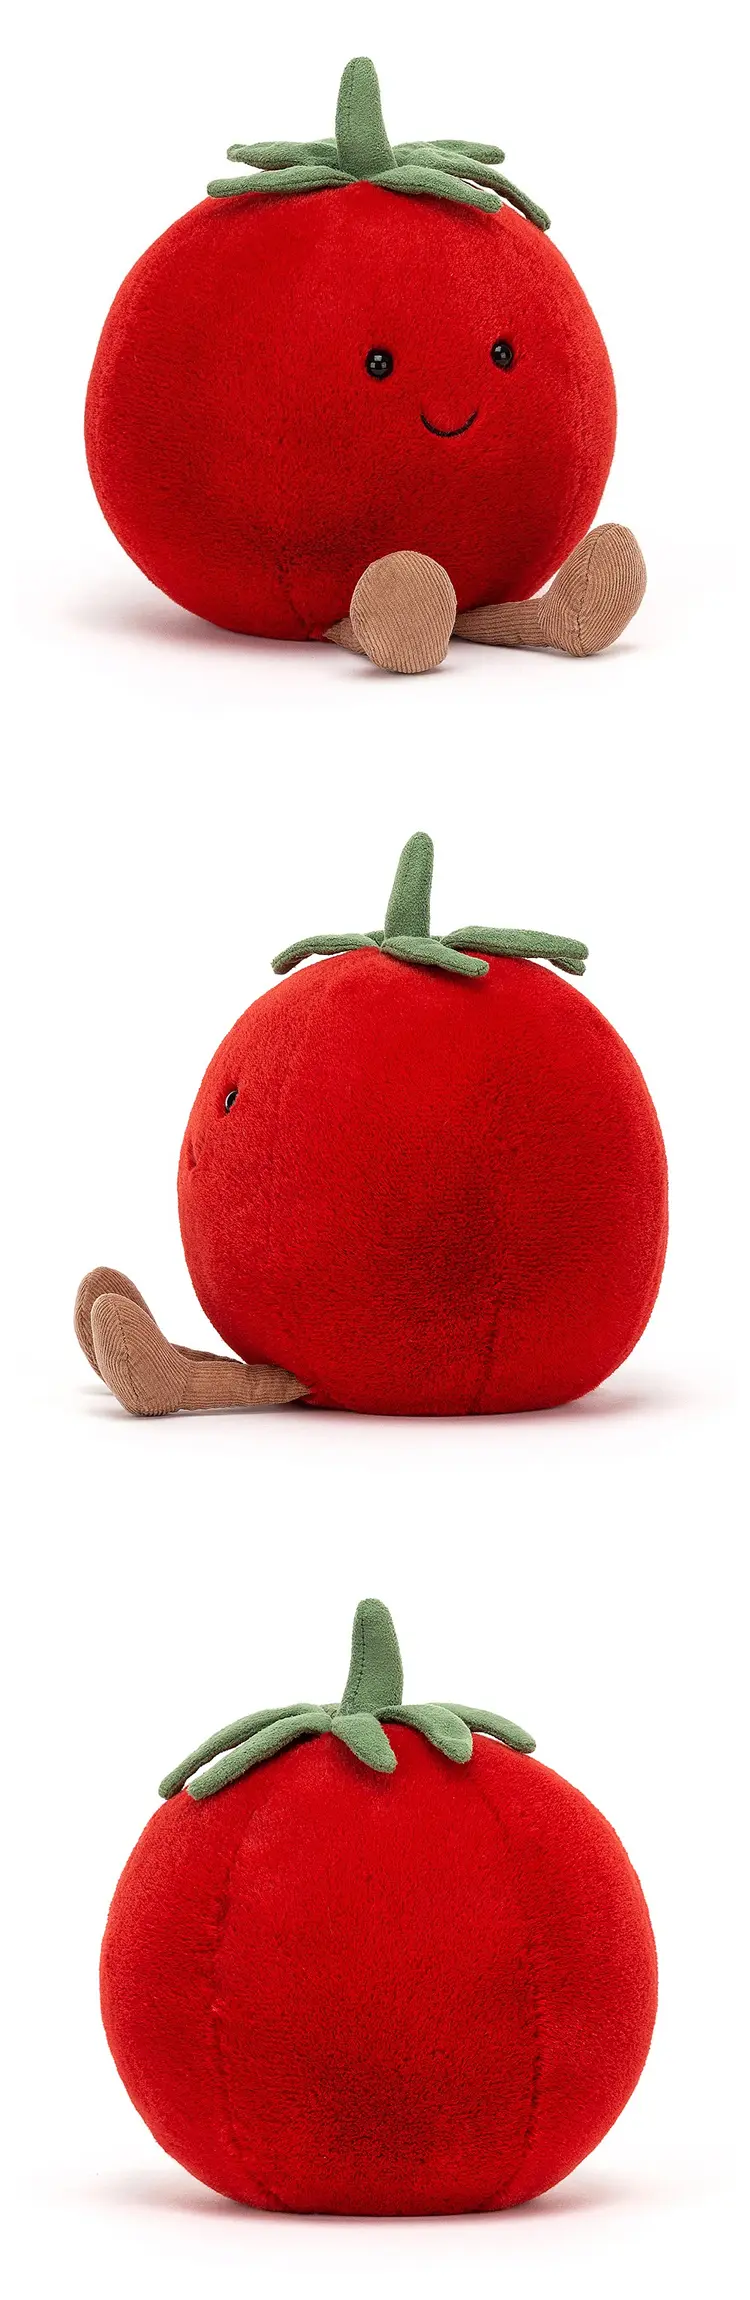 JellyCat Amuseable Tomato 趣味番茄公仔